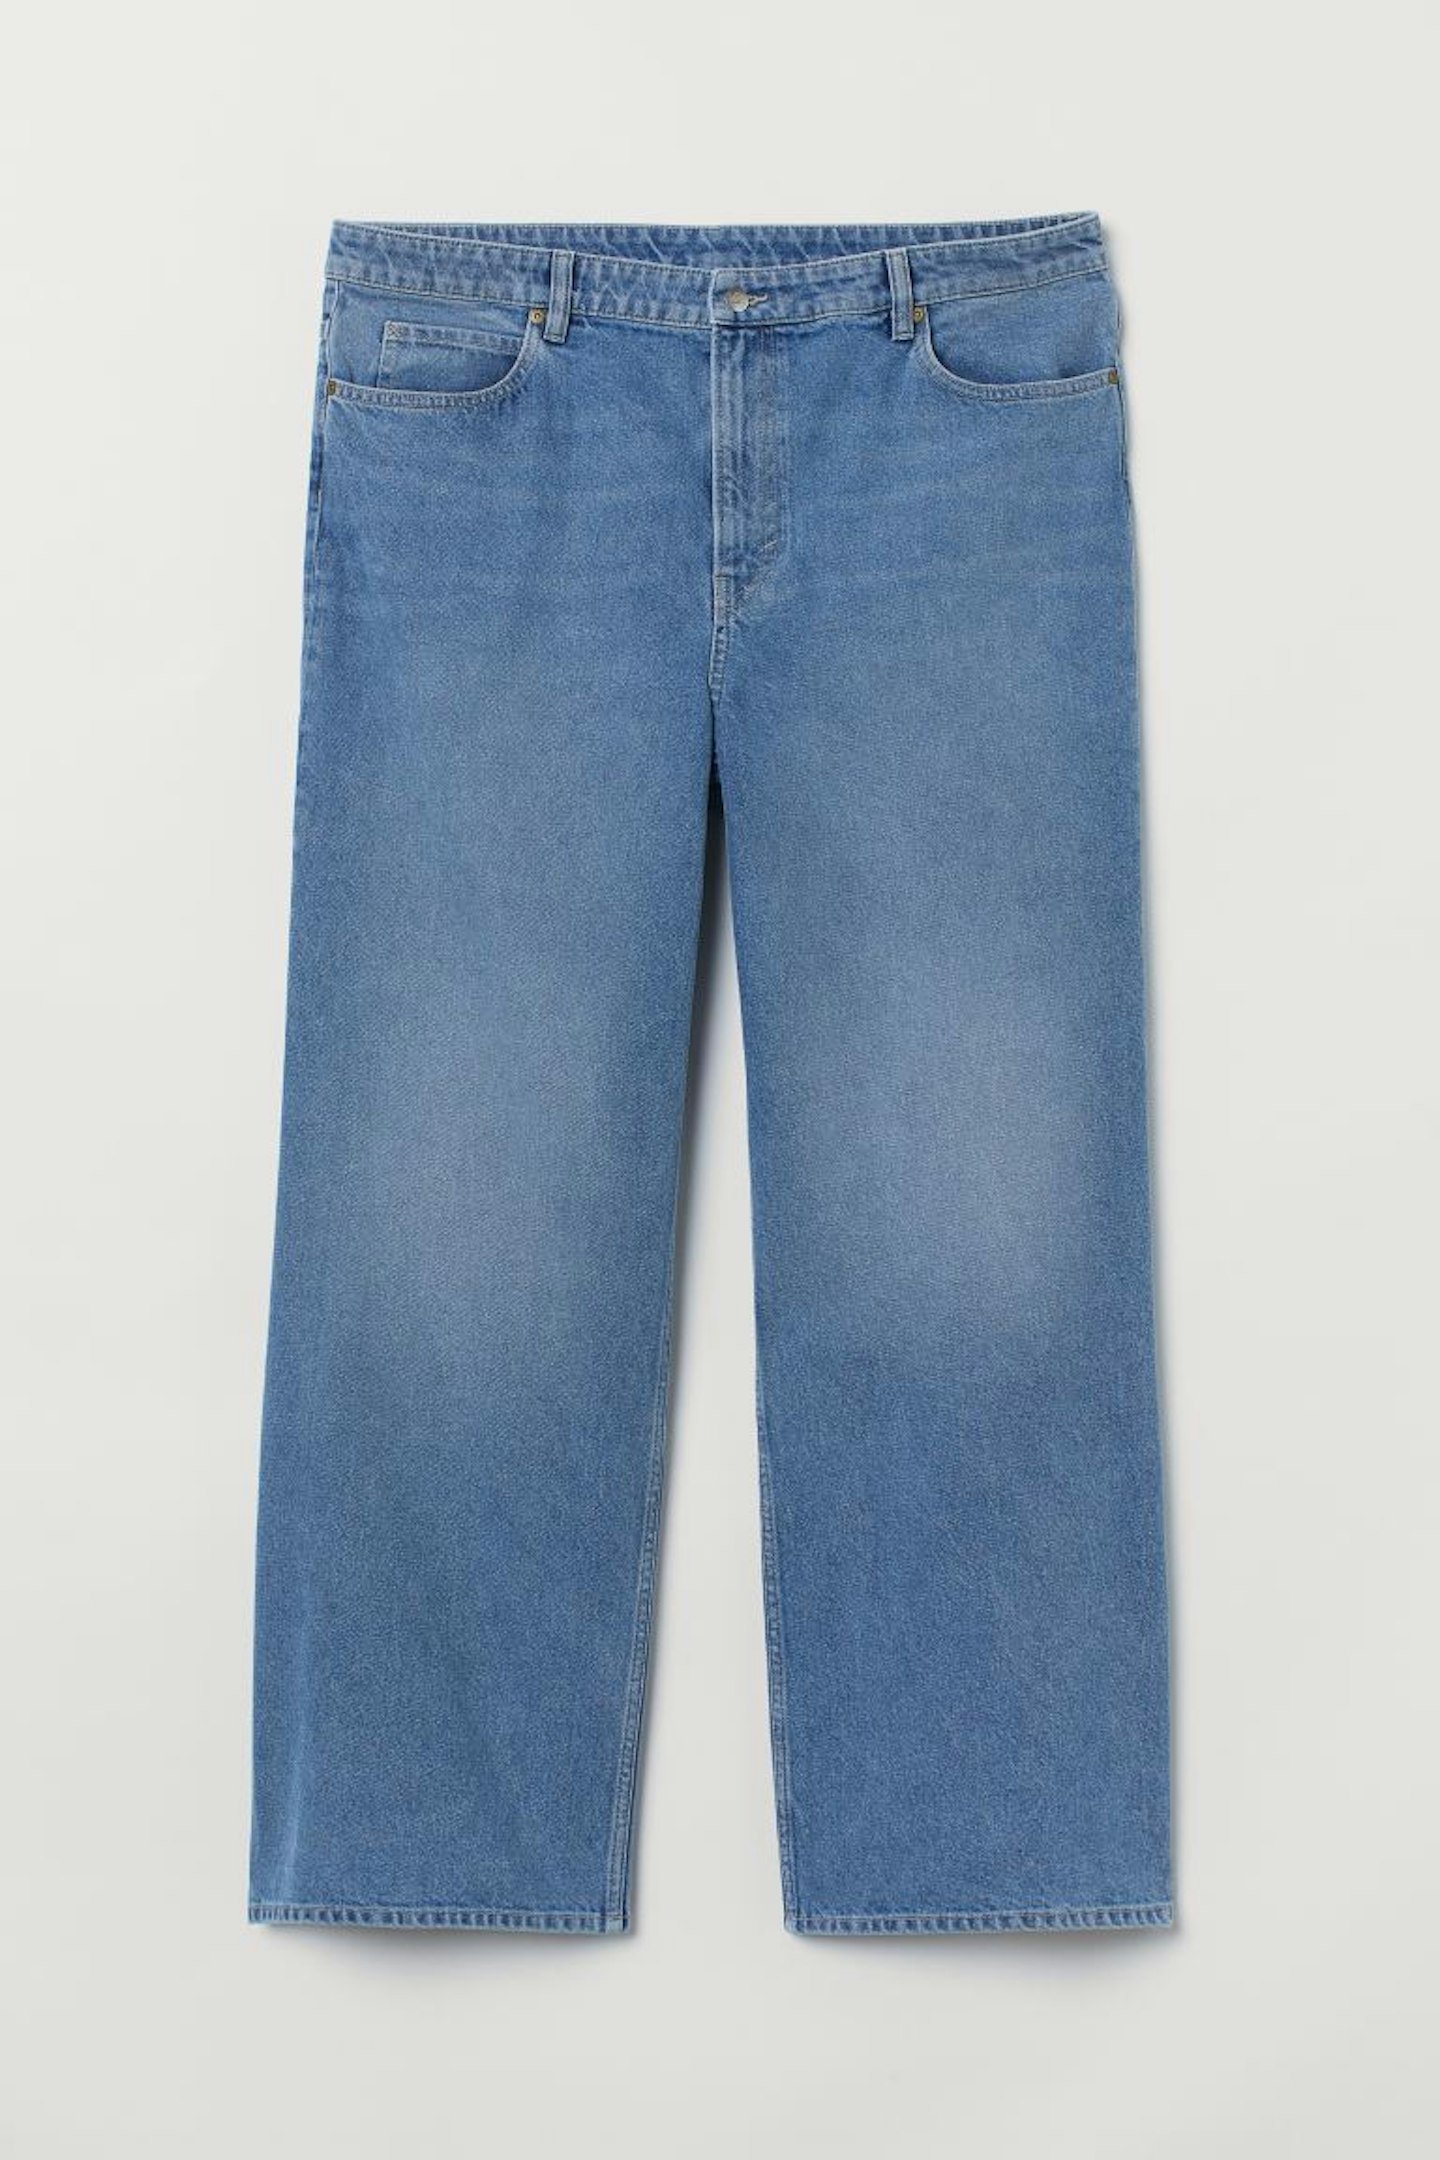 Lee X H&M, H&M+ Wide High-Waist Jeans, £34.99